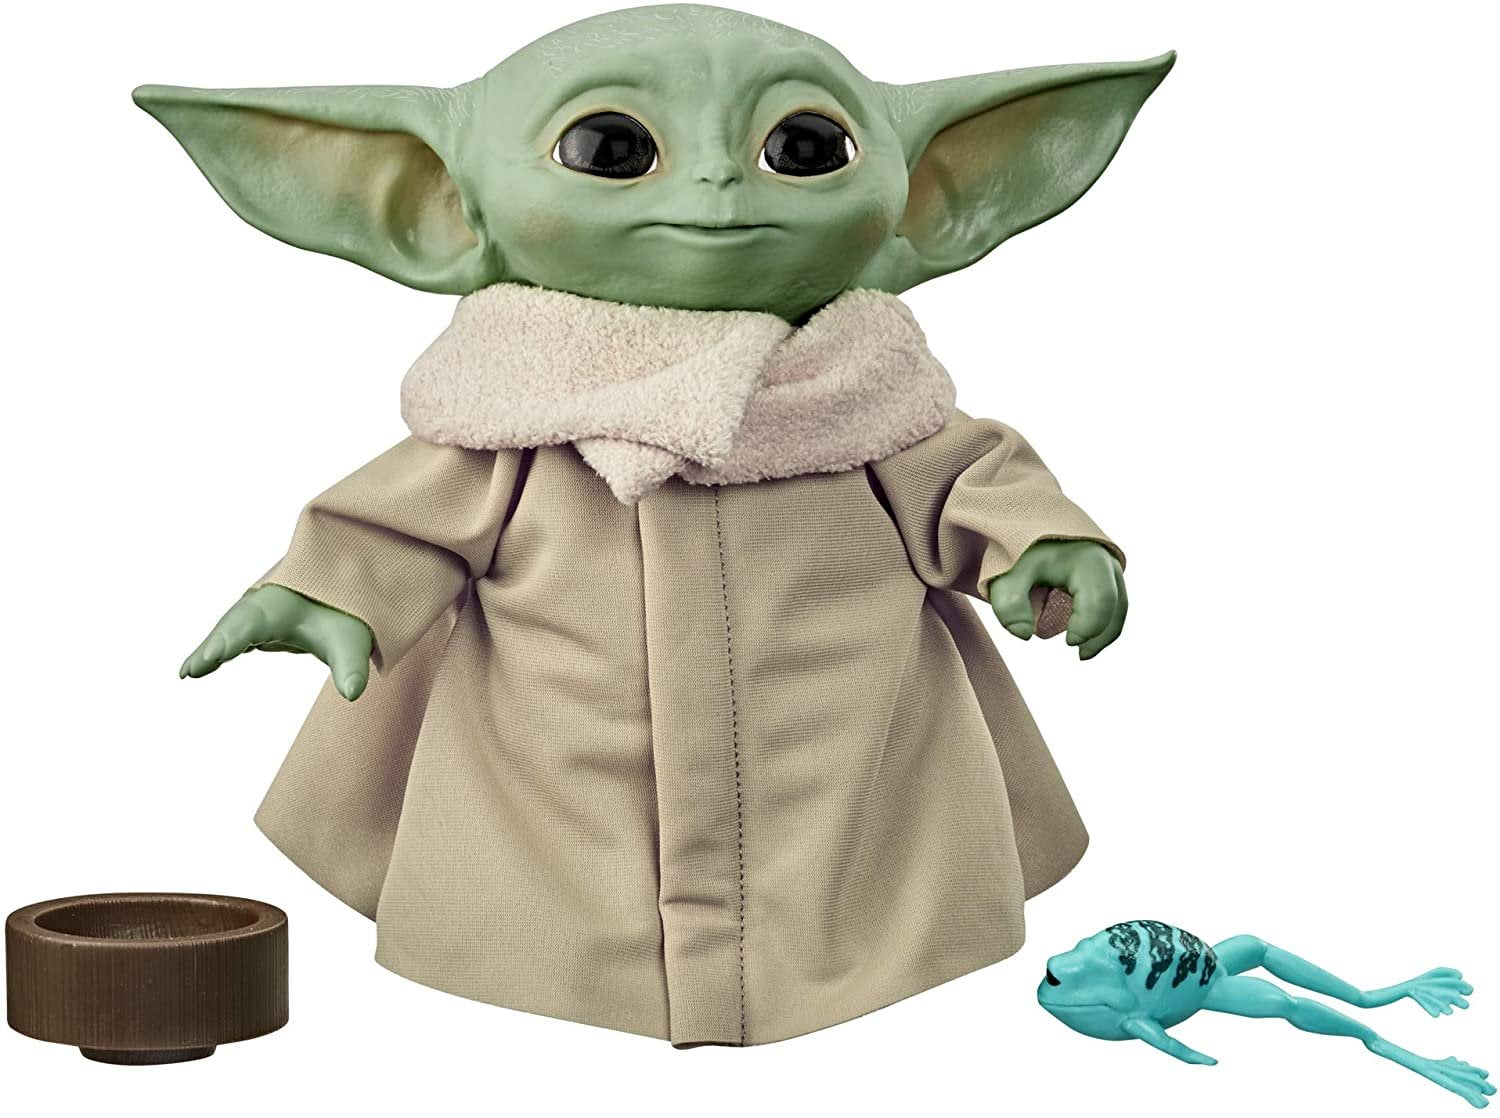 BRAND NEW Star Wars The Mandalorian Talking Plush "The Child" Baby Yoda 